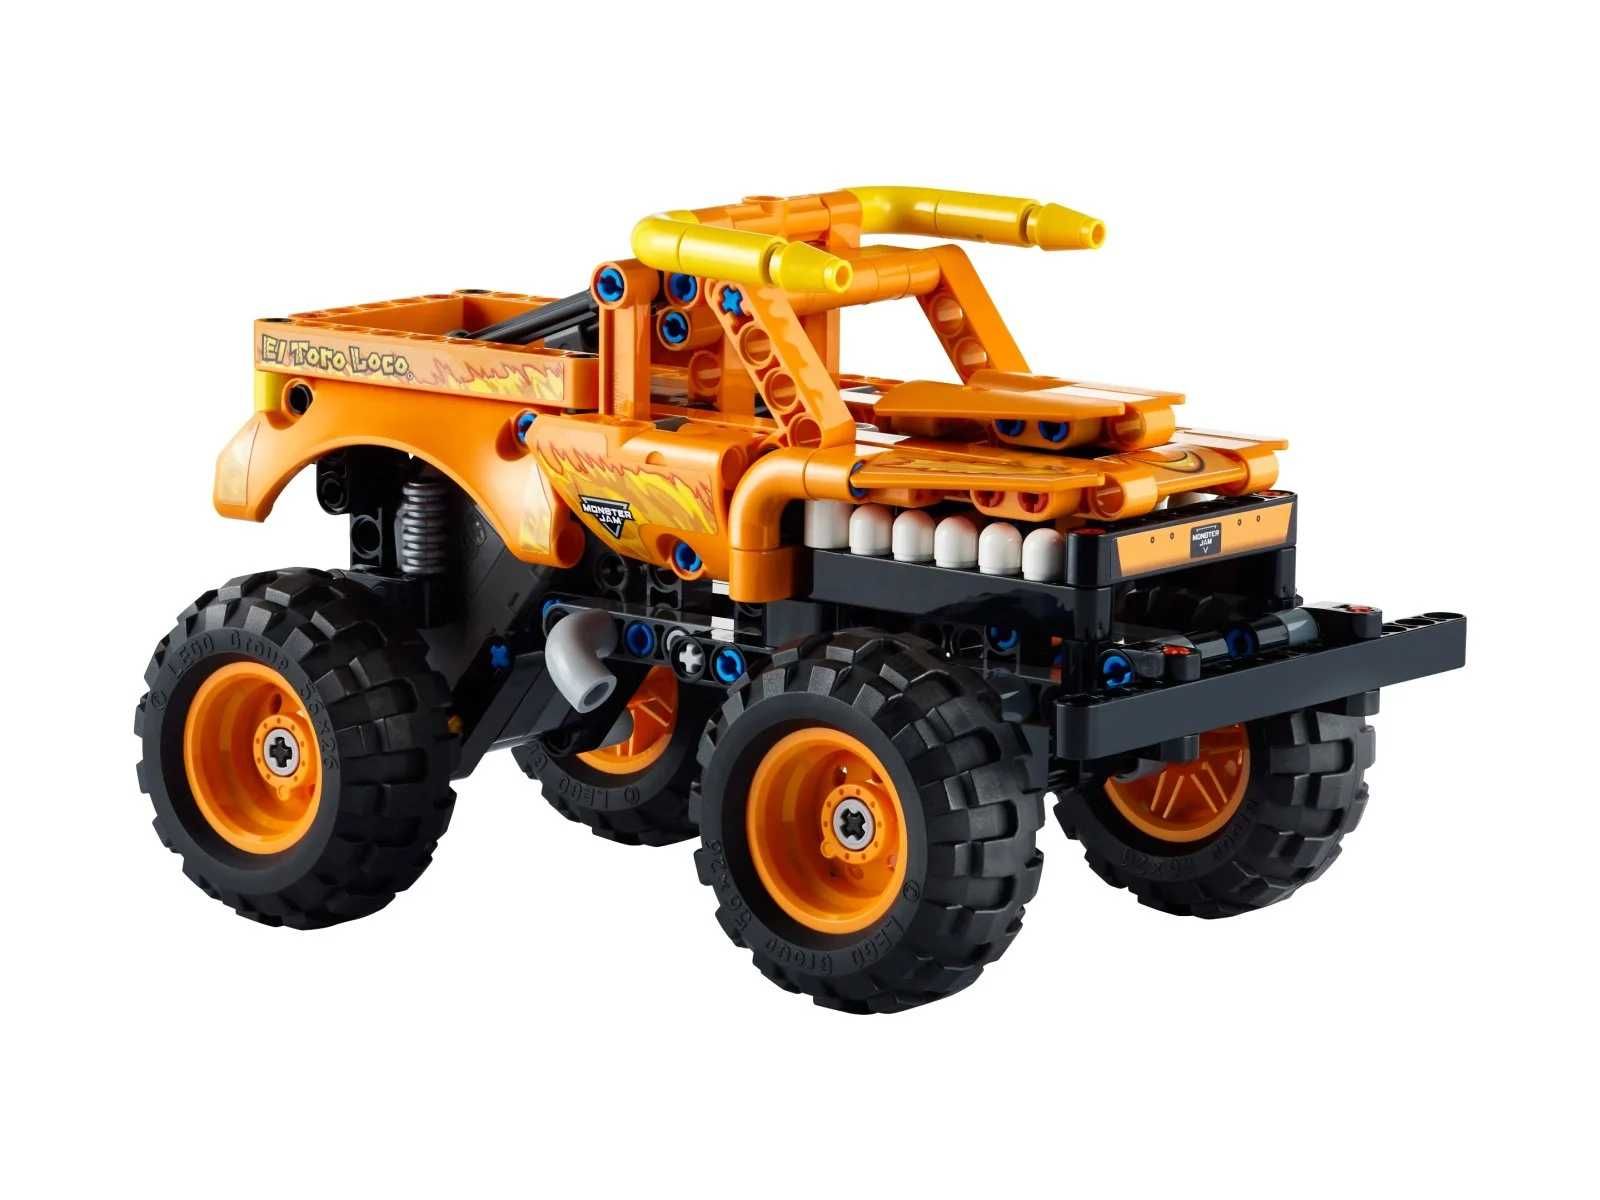 LEGO Technic Samochód Monster Jam El Toro Loco, 42135